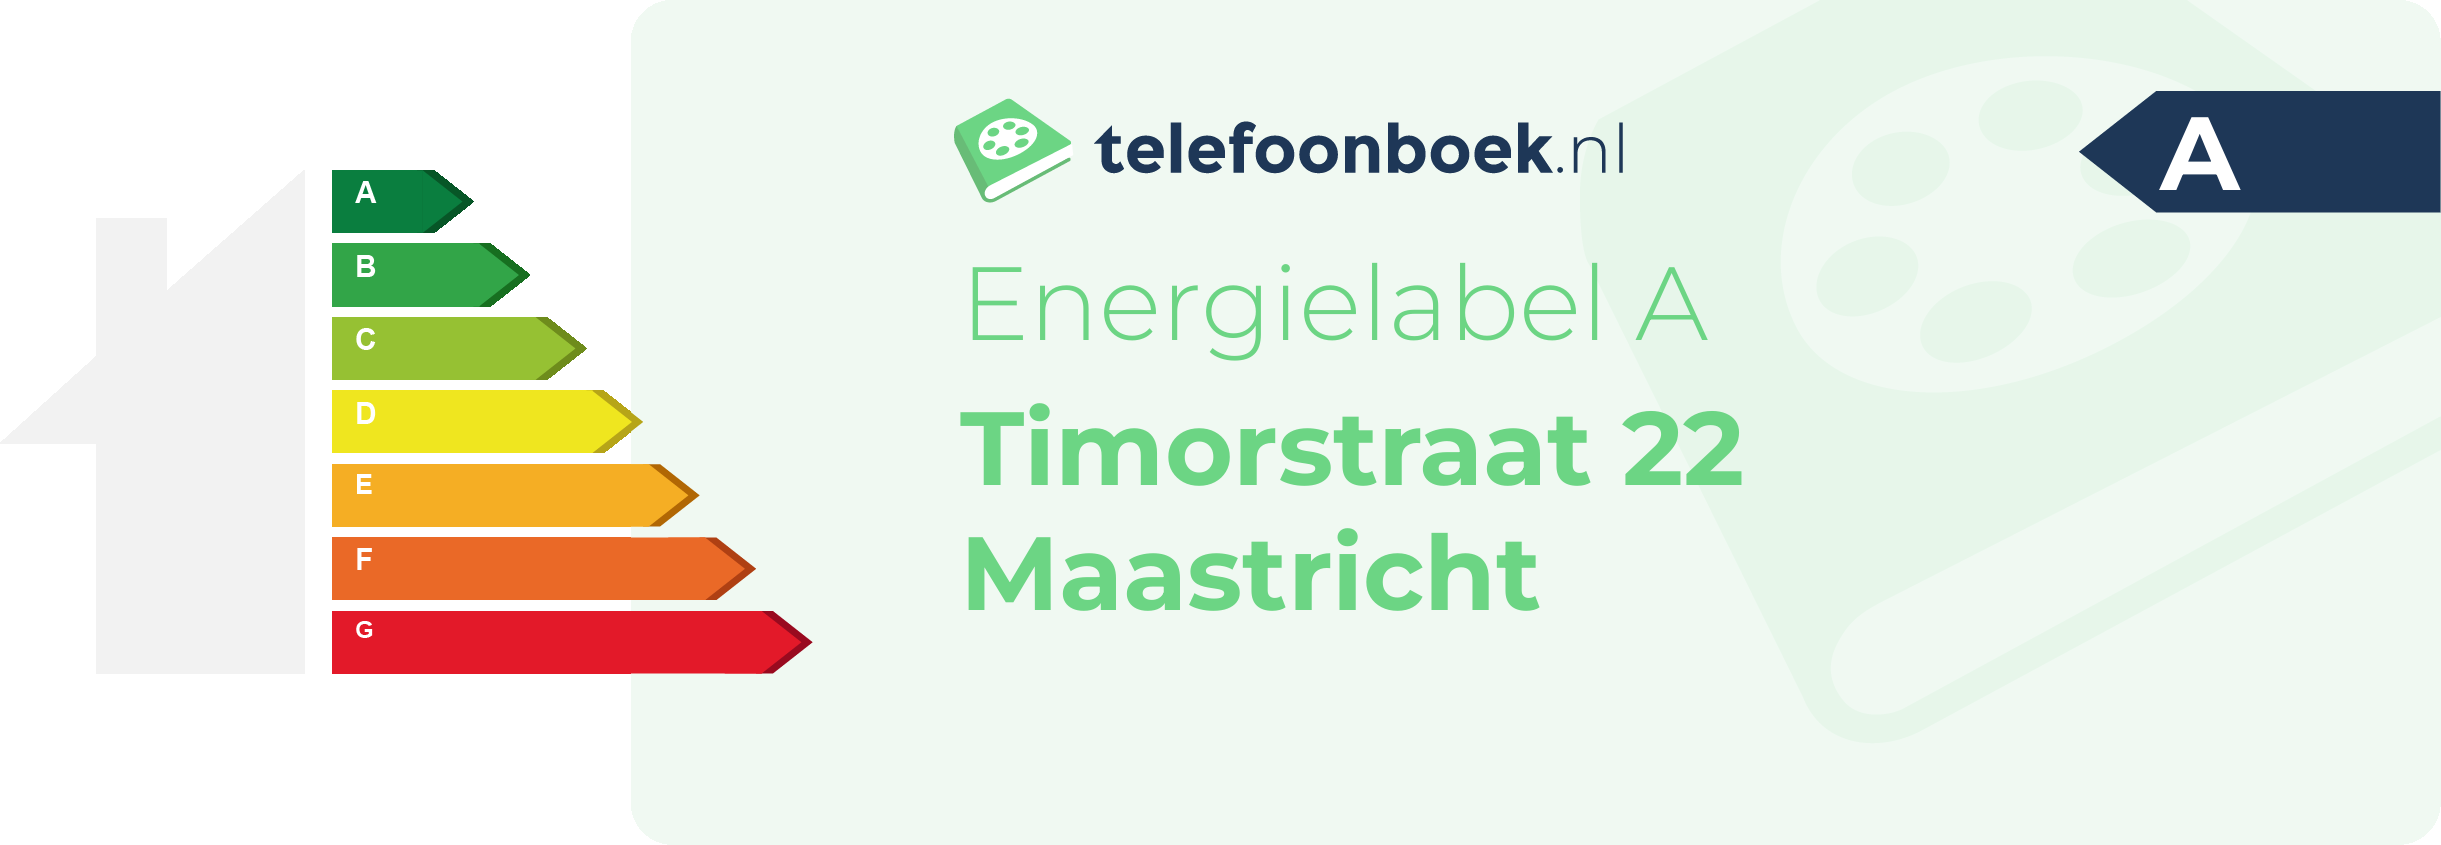 Energielabel Timorstraat 22 Maastricht